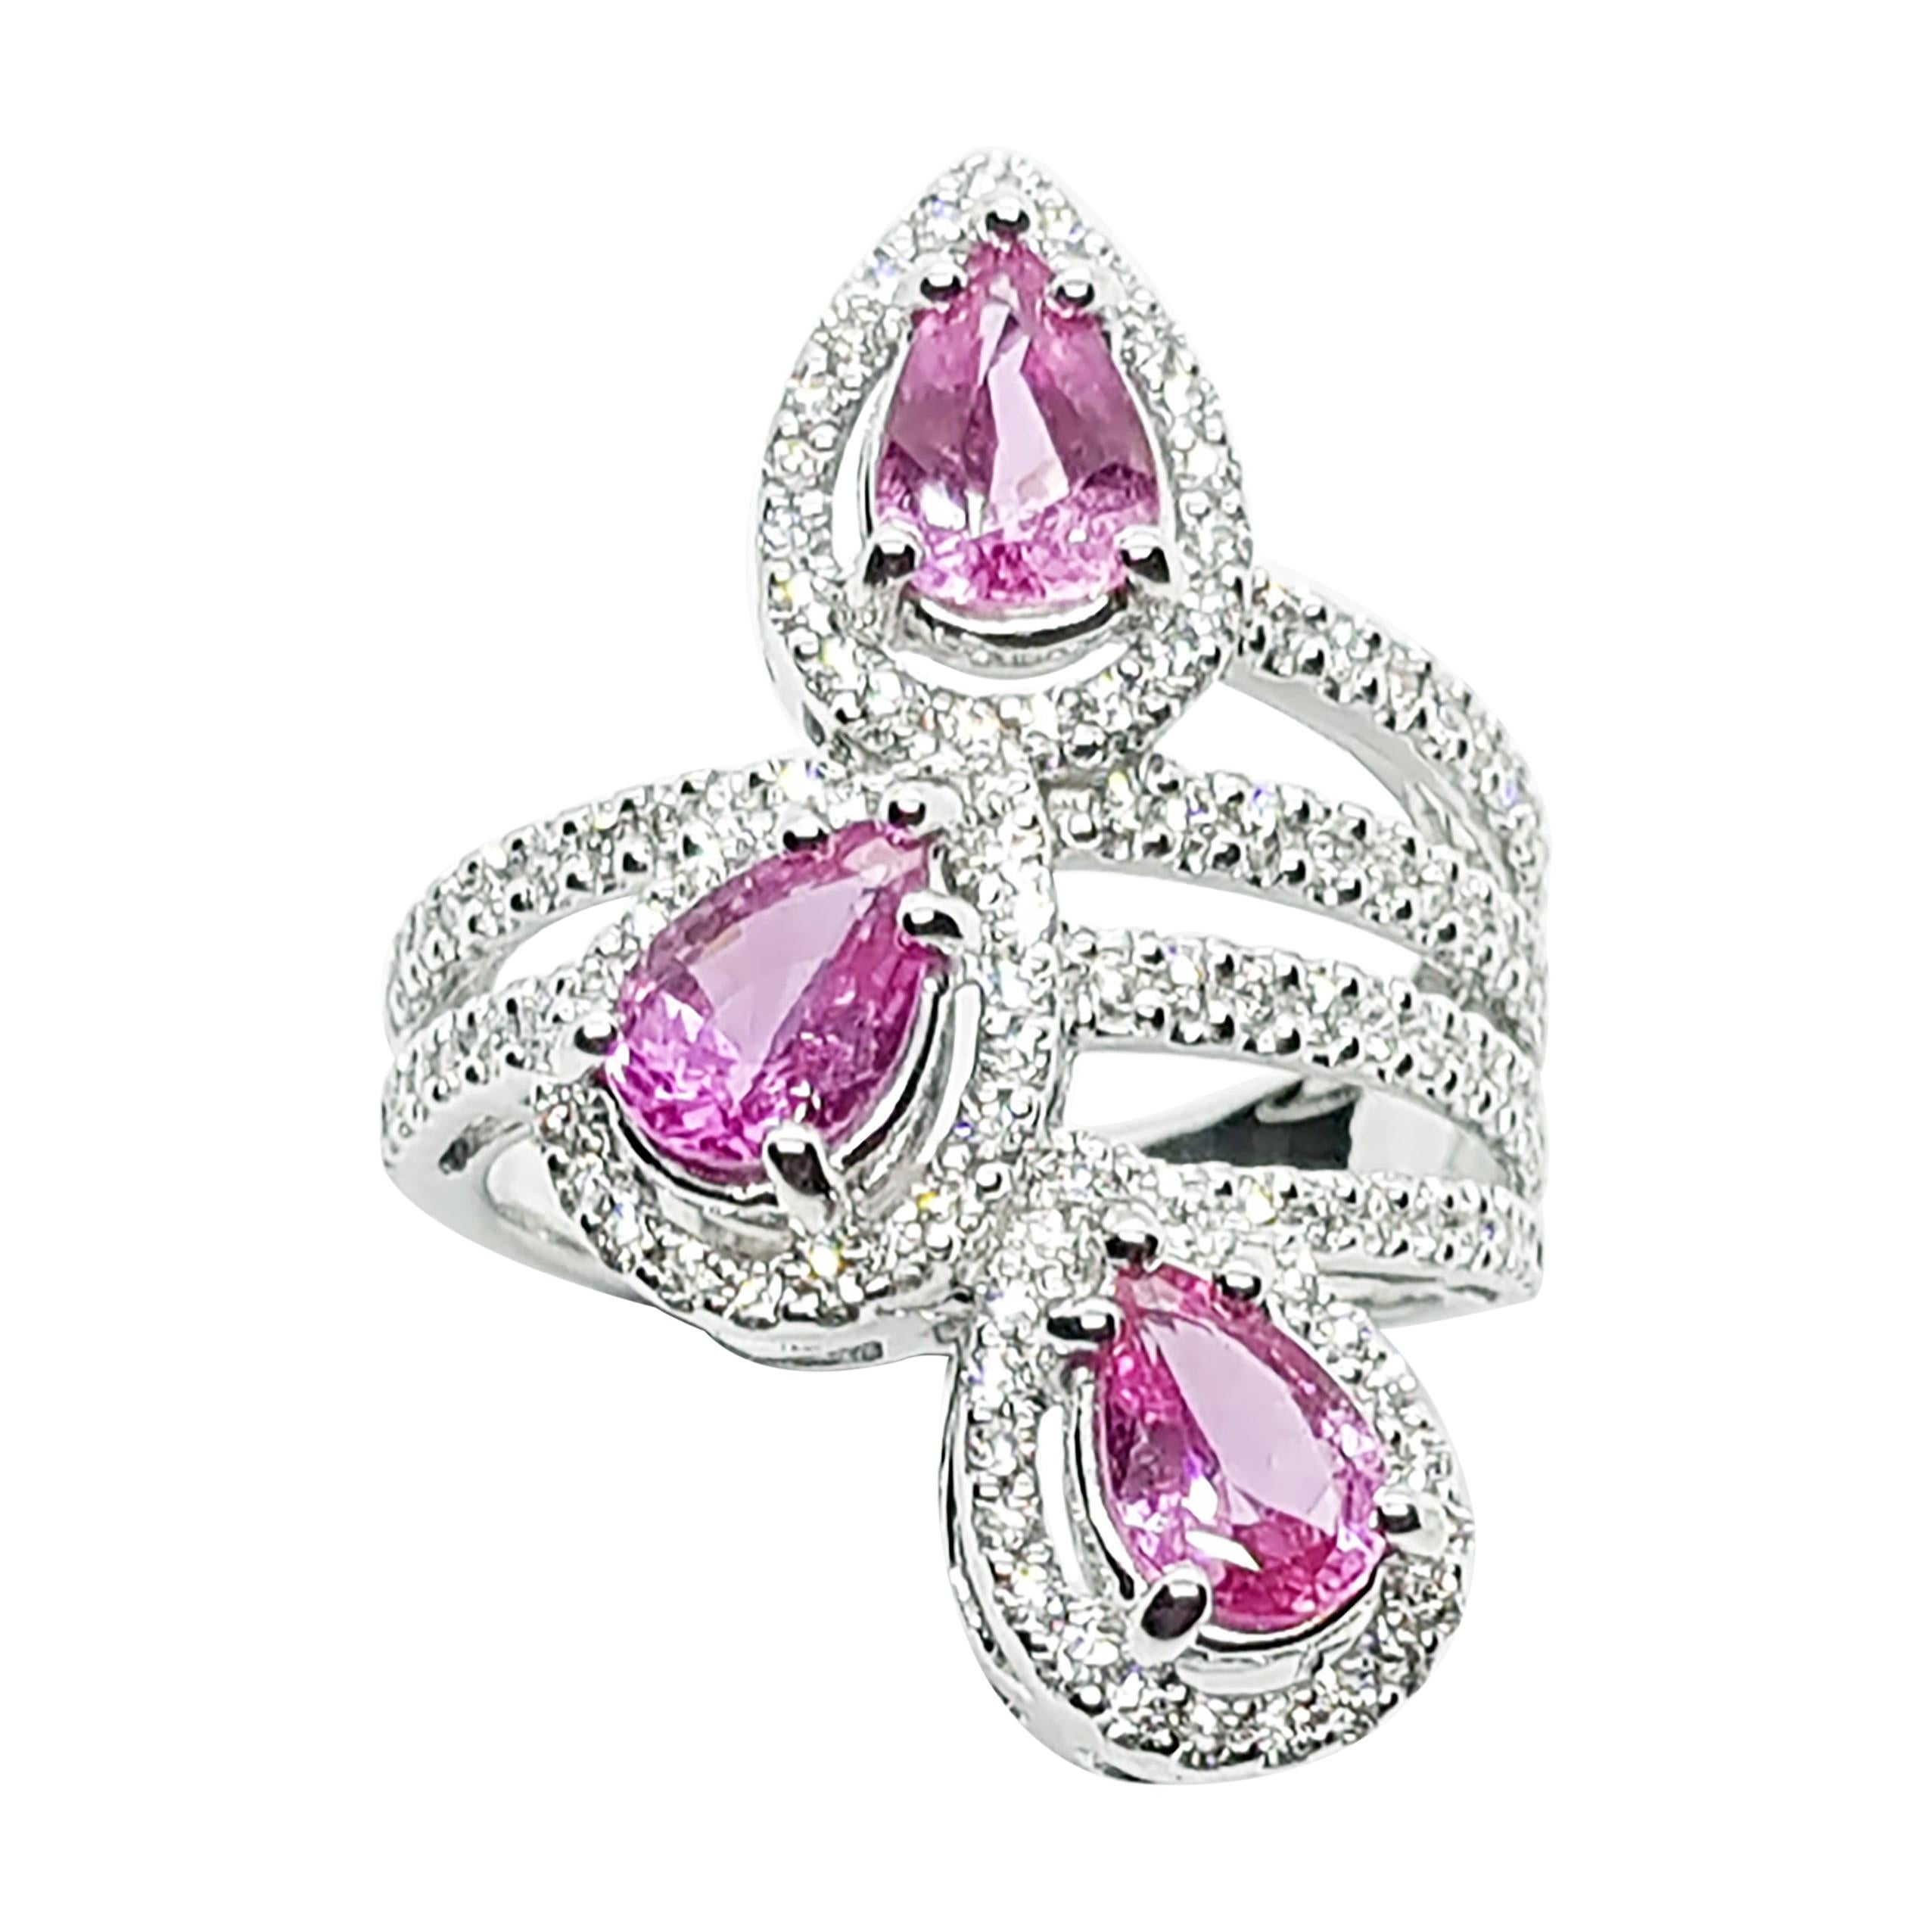 Pink Sapphire with Diamond Ring Set in 18 Karat White Gold Settings